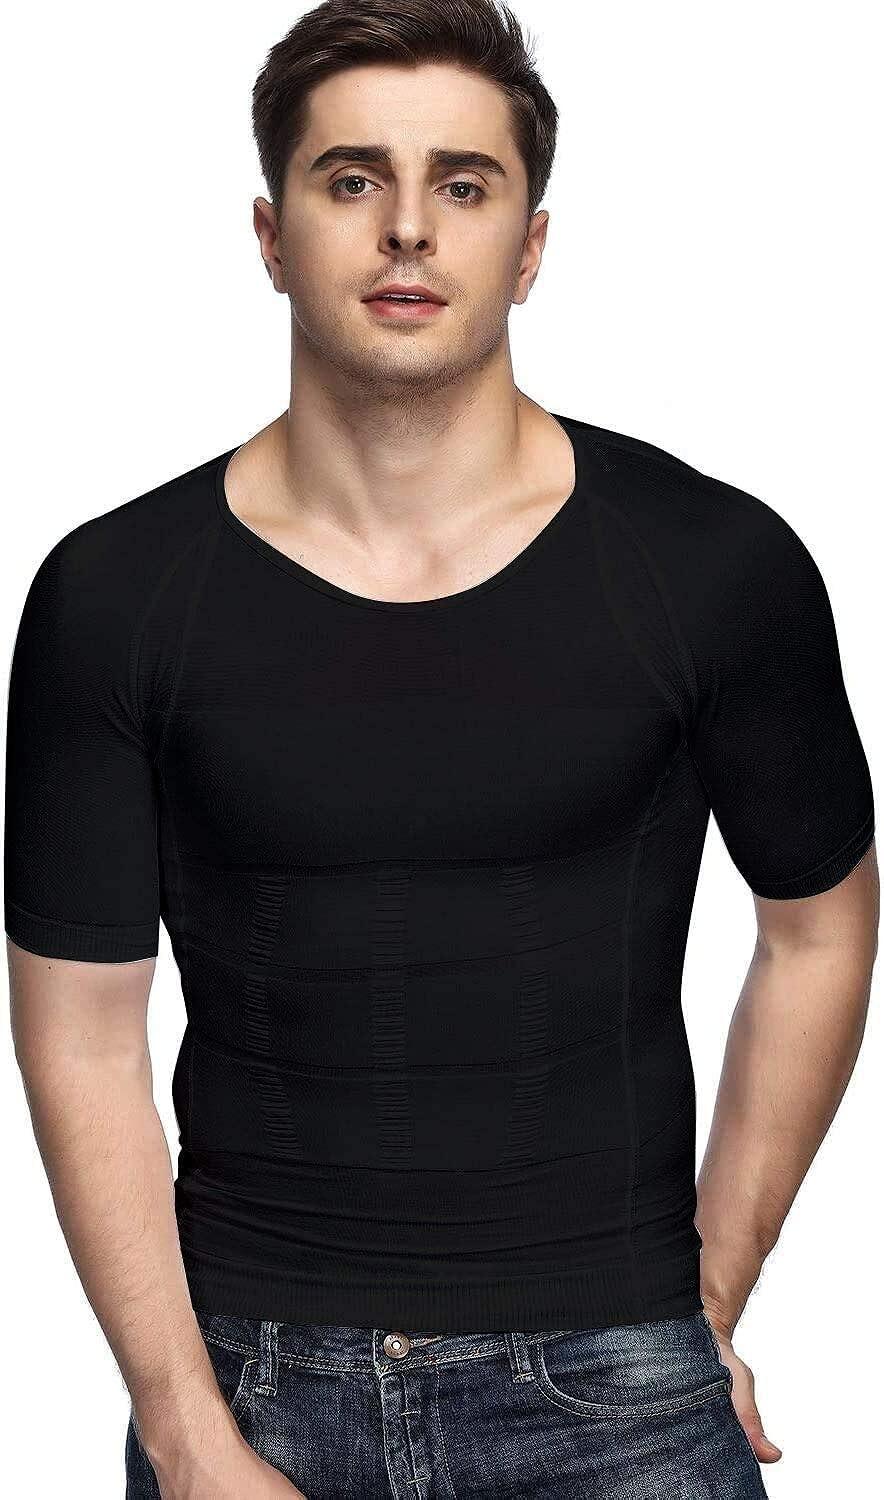 Odoland 3 Pack Men's Body Shaper Slimming Shirt Tummy Vest Thermal